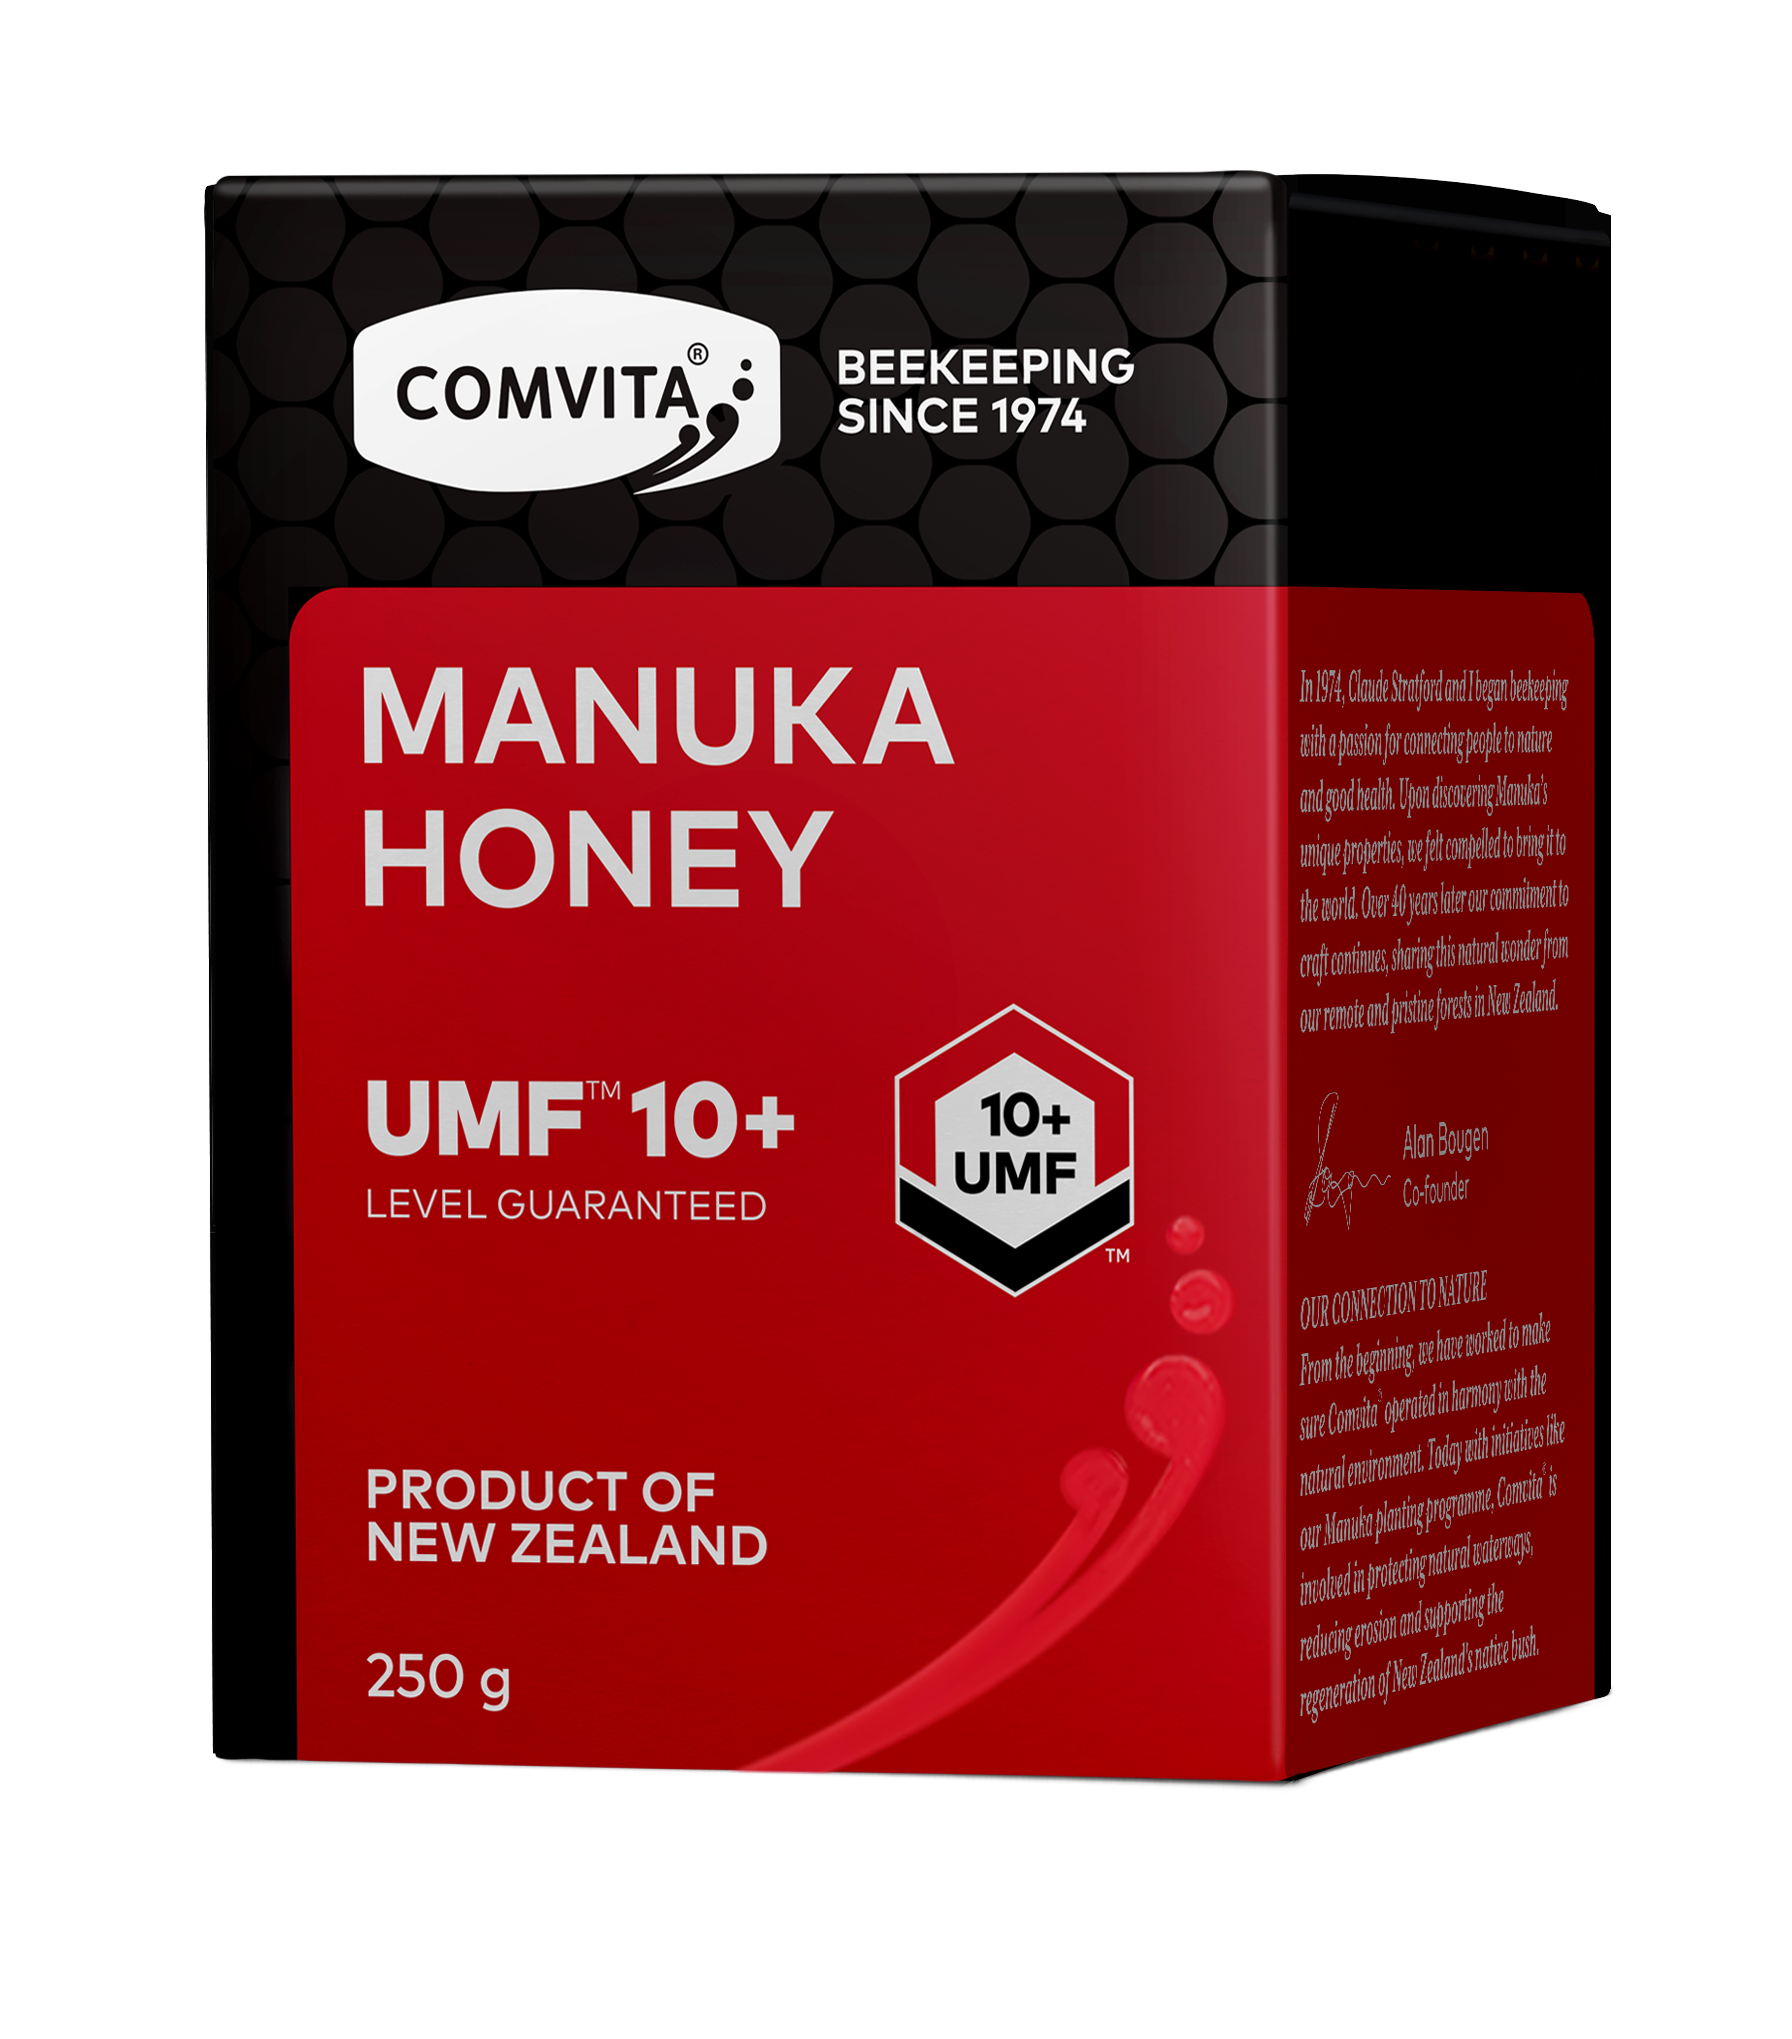 Comvita Manuka Honey UMF™ 10+, 250 g.